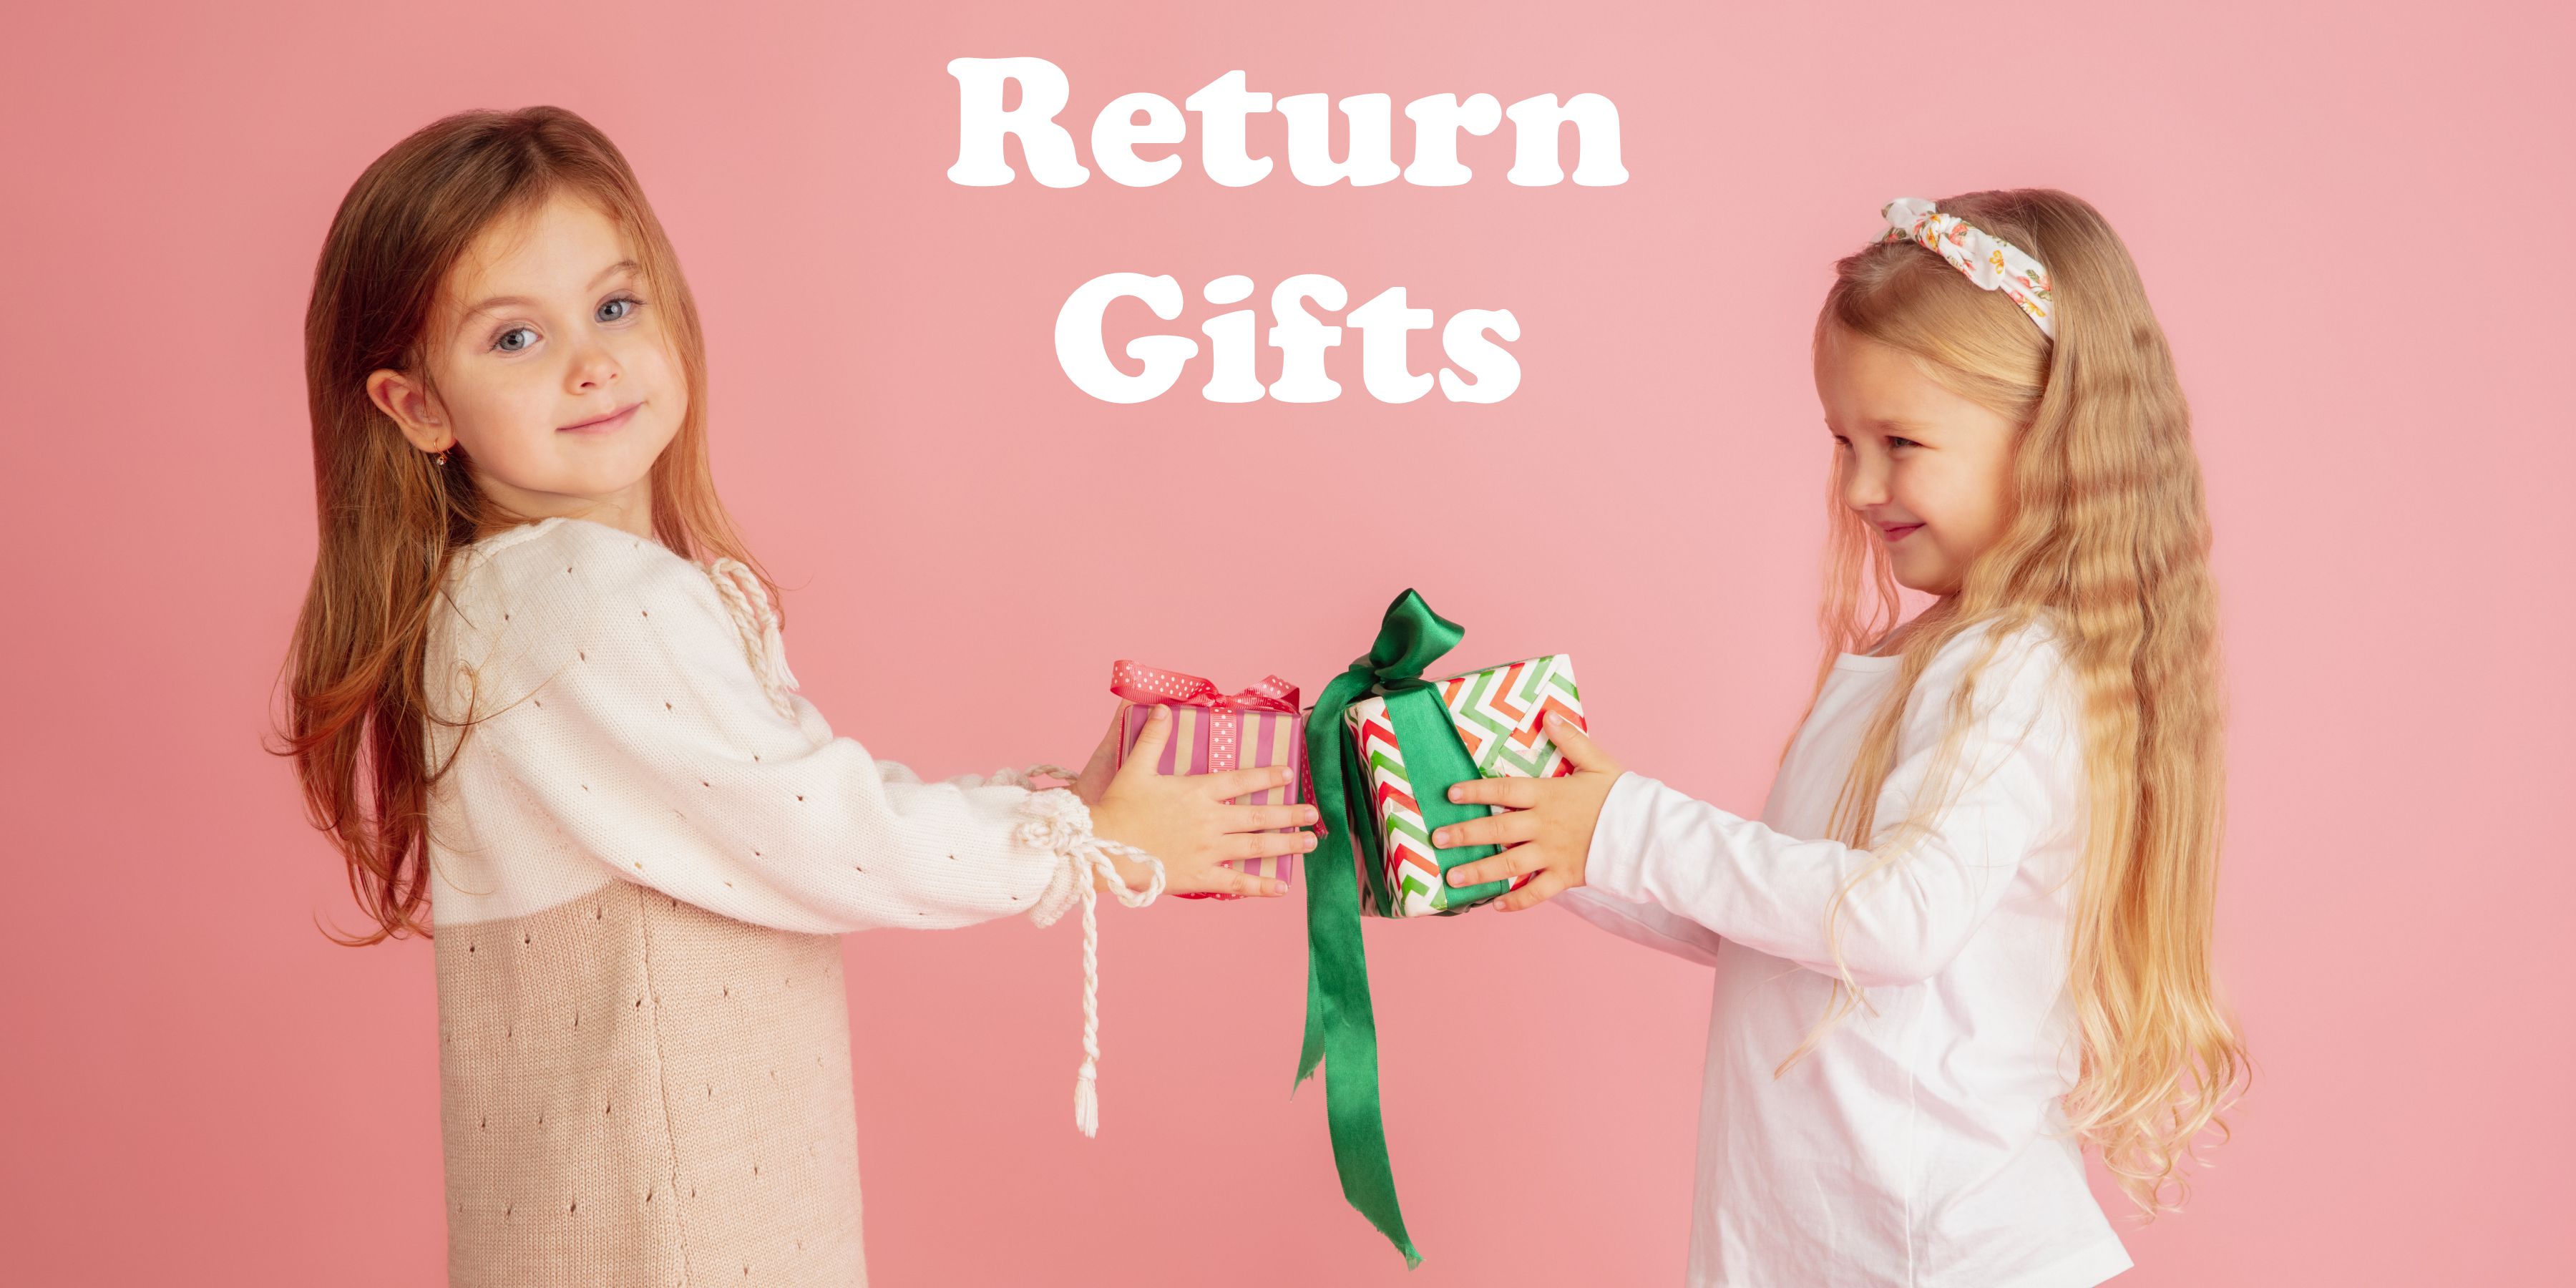 Return Gifts